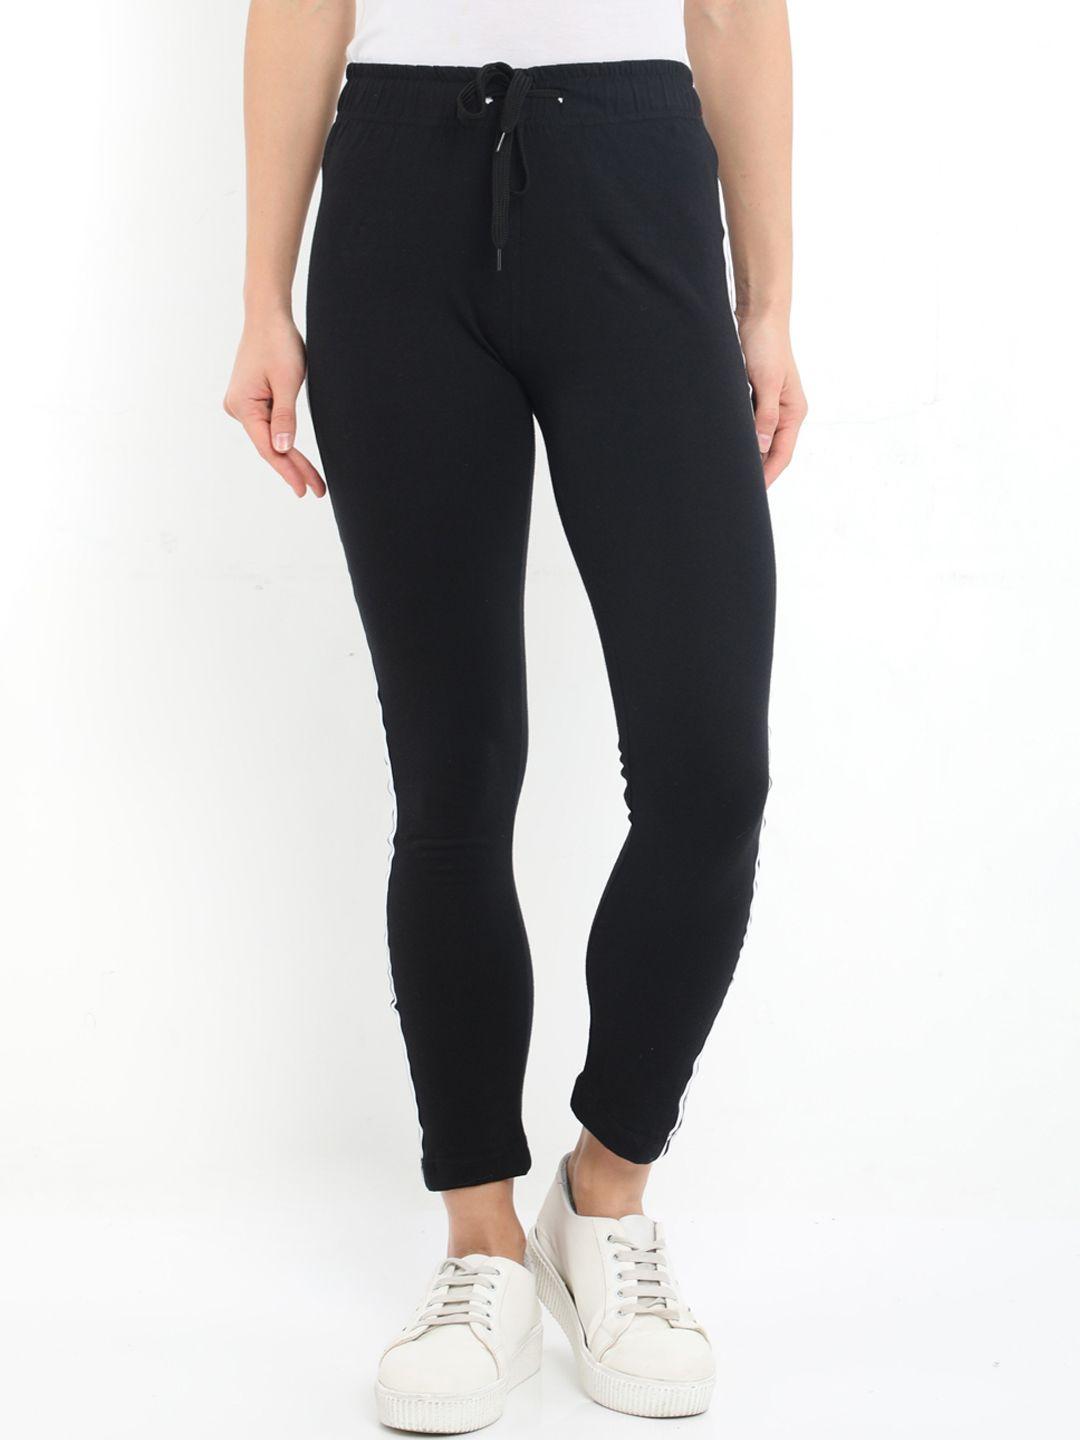 fleximaa women black solid cotton track pants